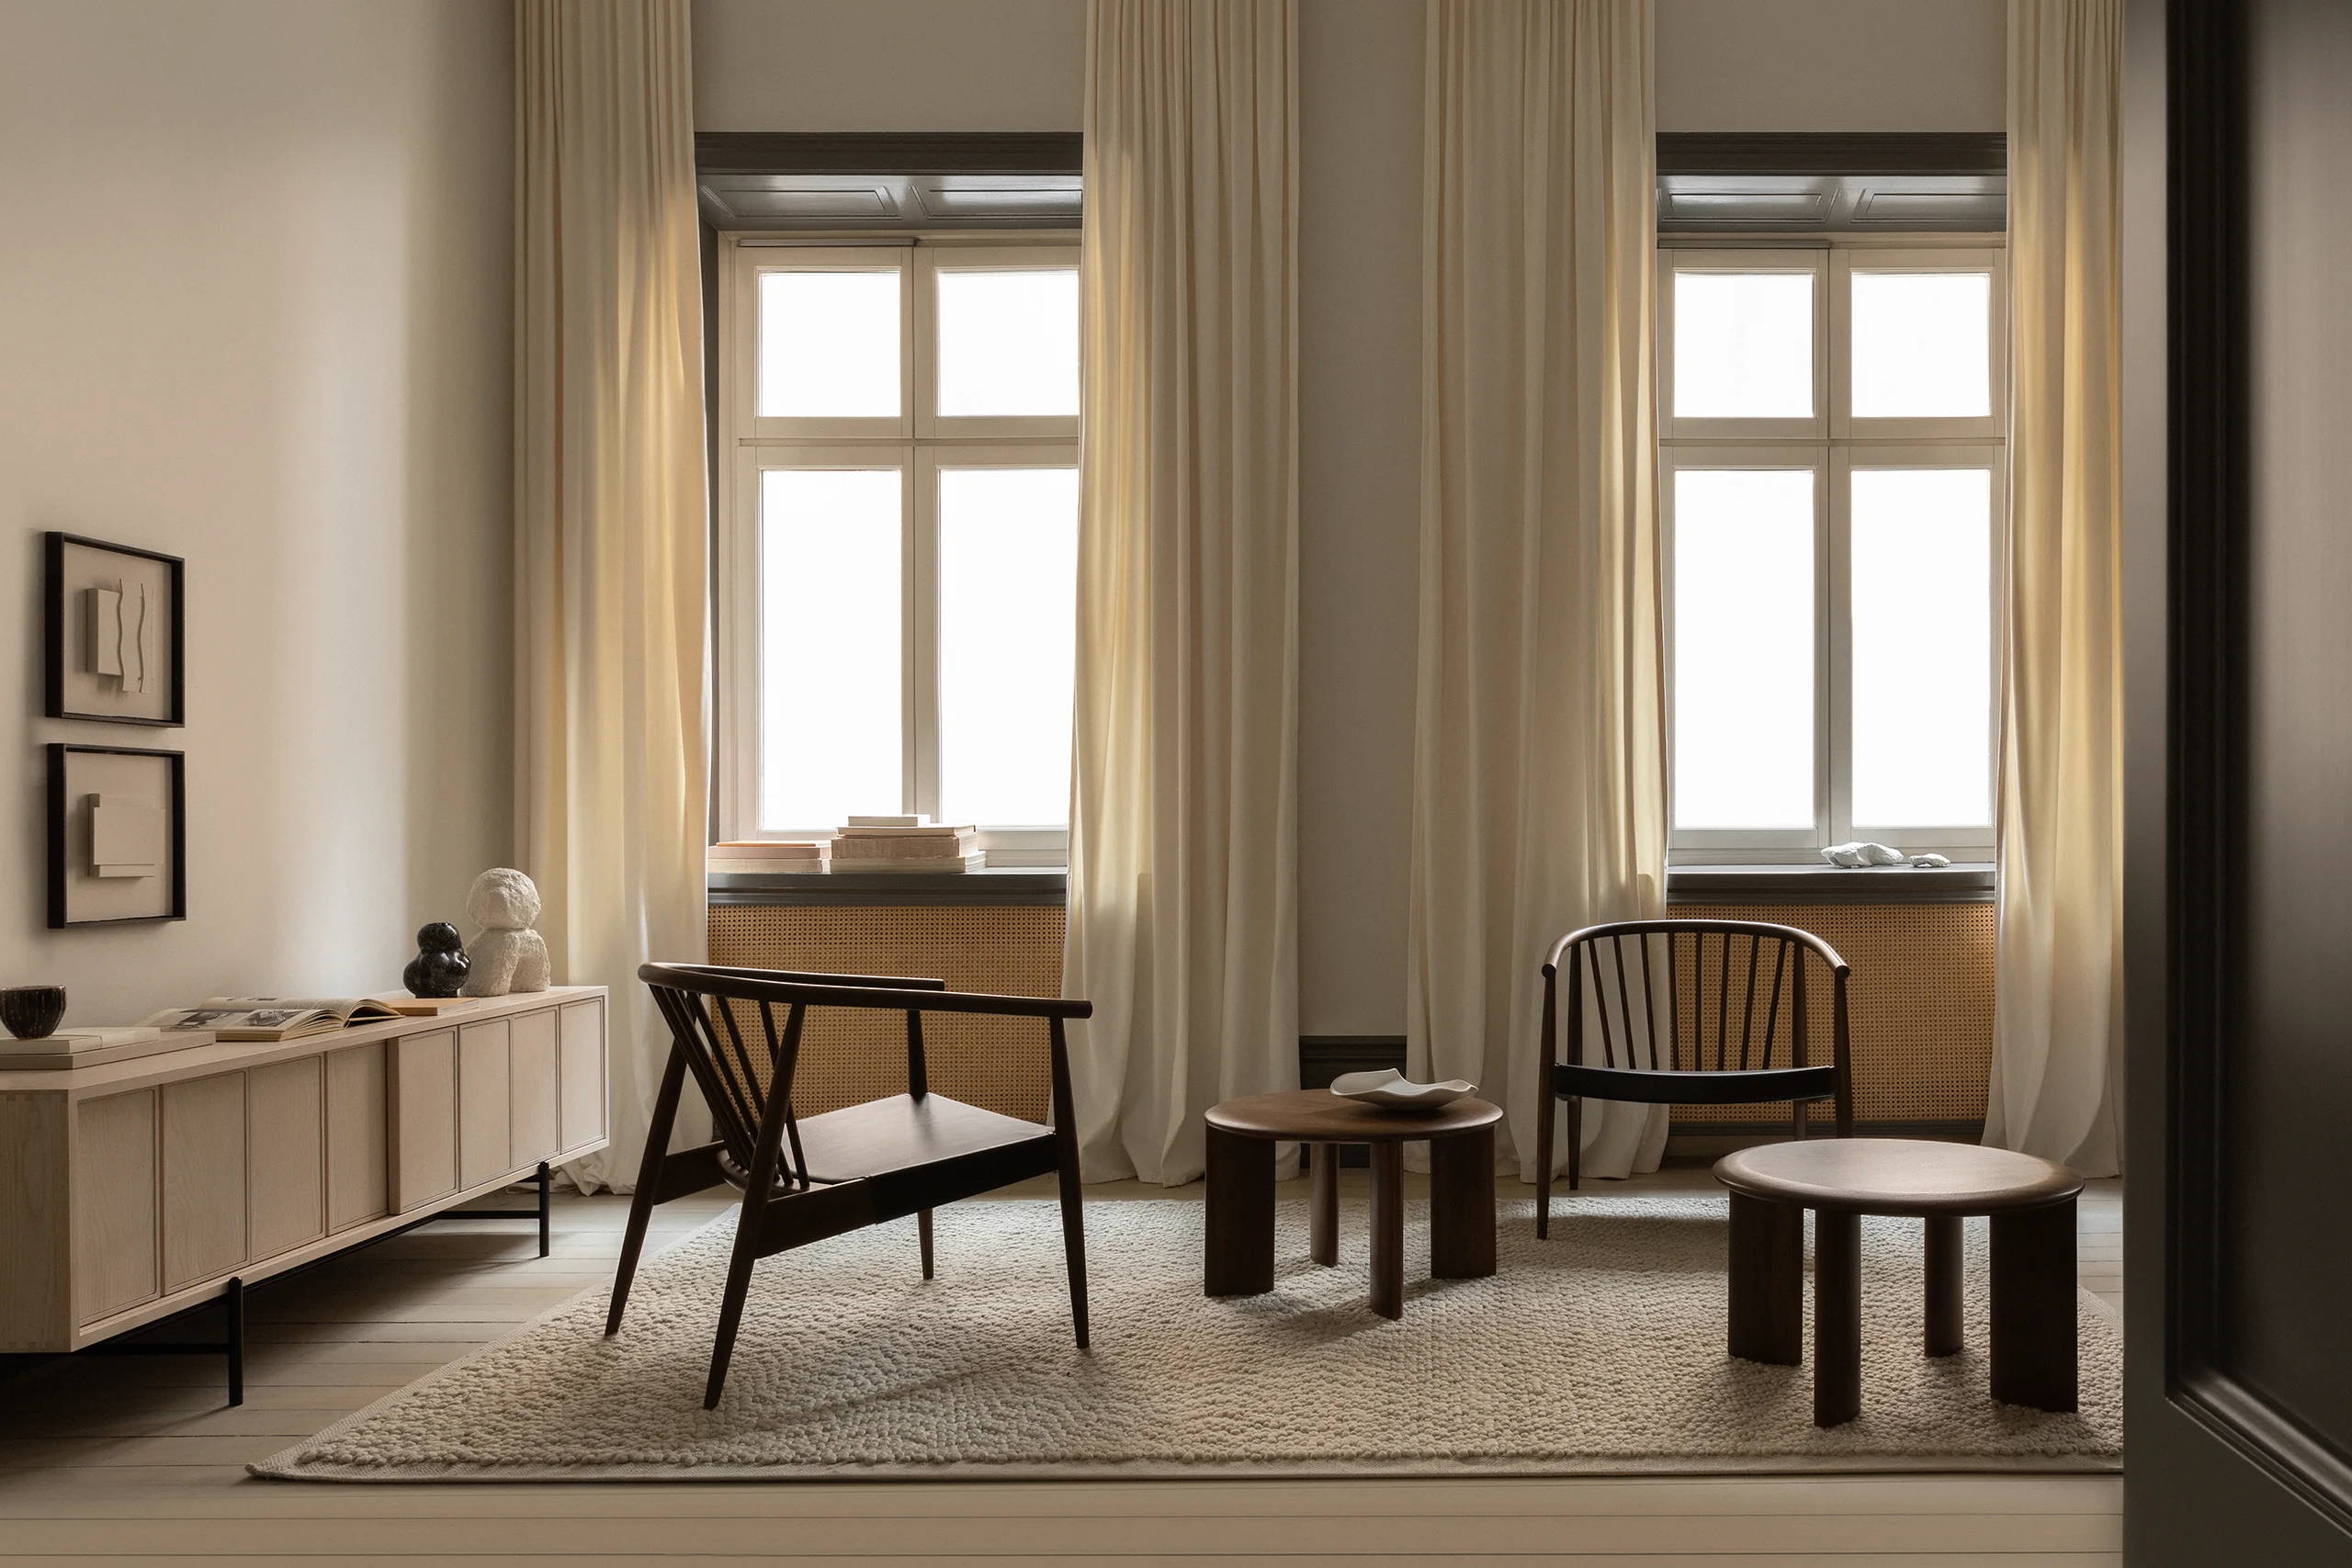 l-ercolani-ercol-furniture-mid-century-modern-british-furniture-design-hand-crafted-design-pieces